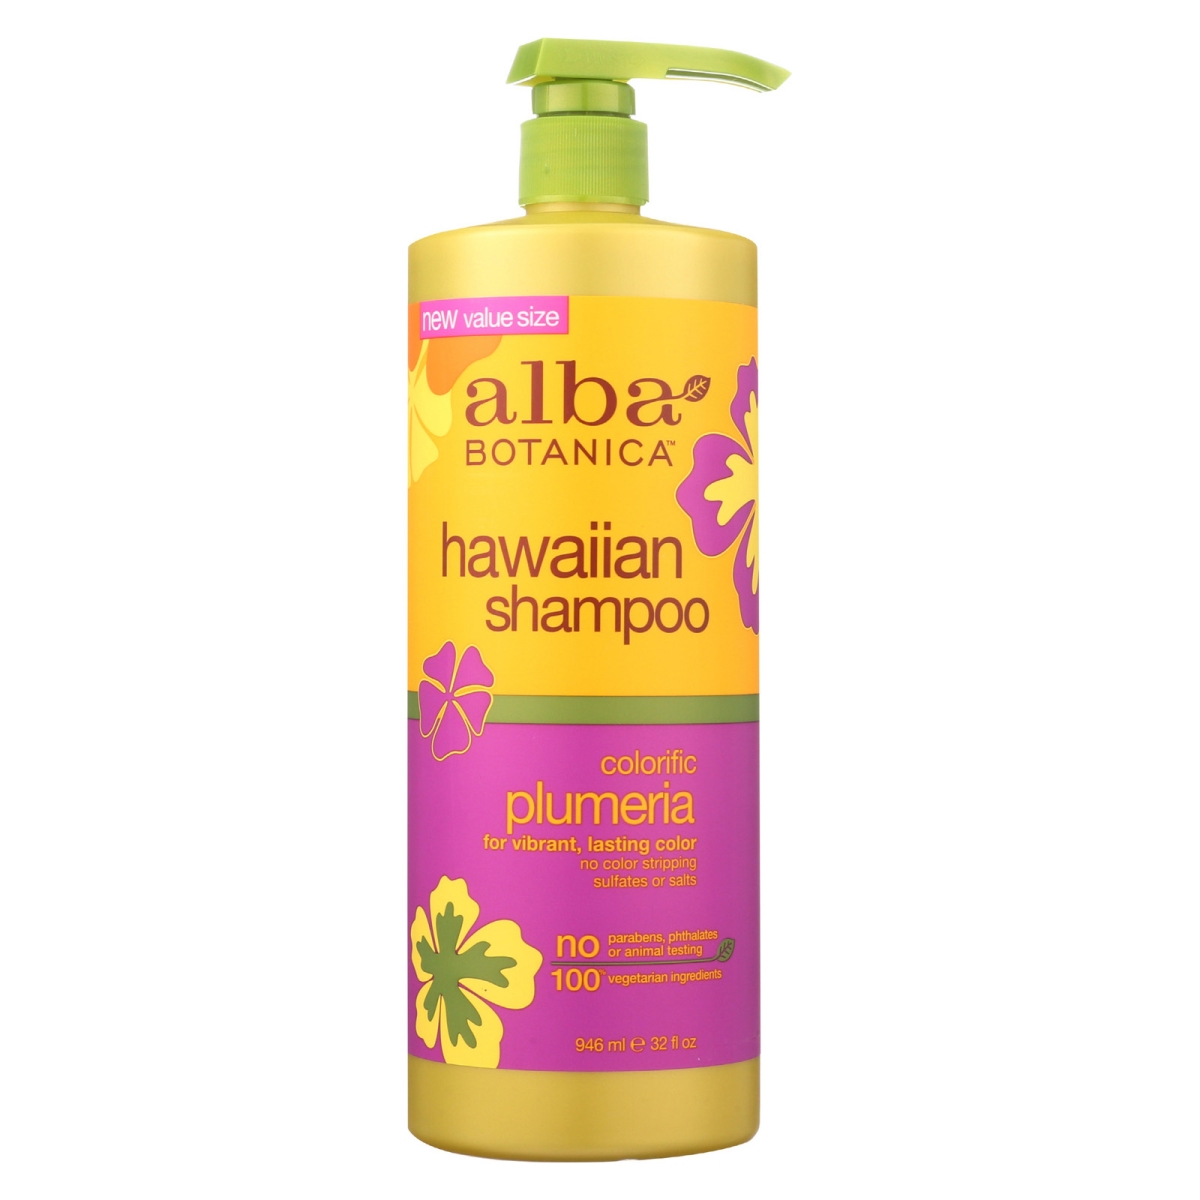 1924141 32 Fl Oz Colorific Plumeria Hawaiian Shampoo